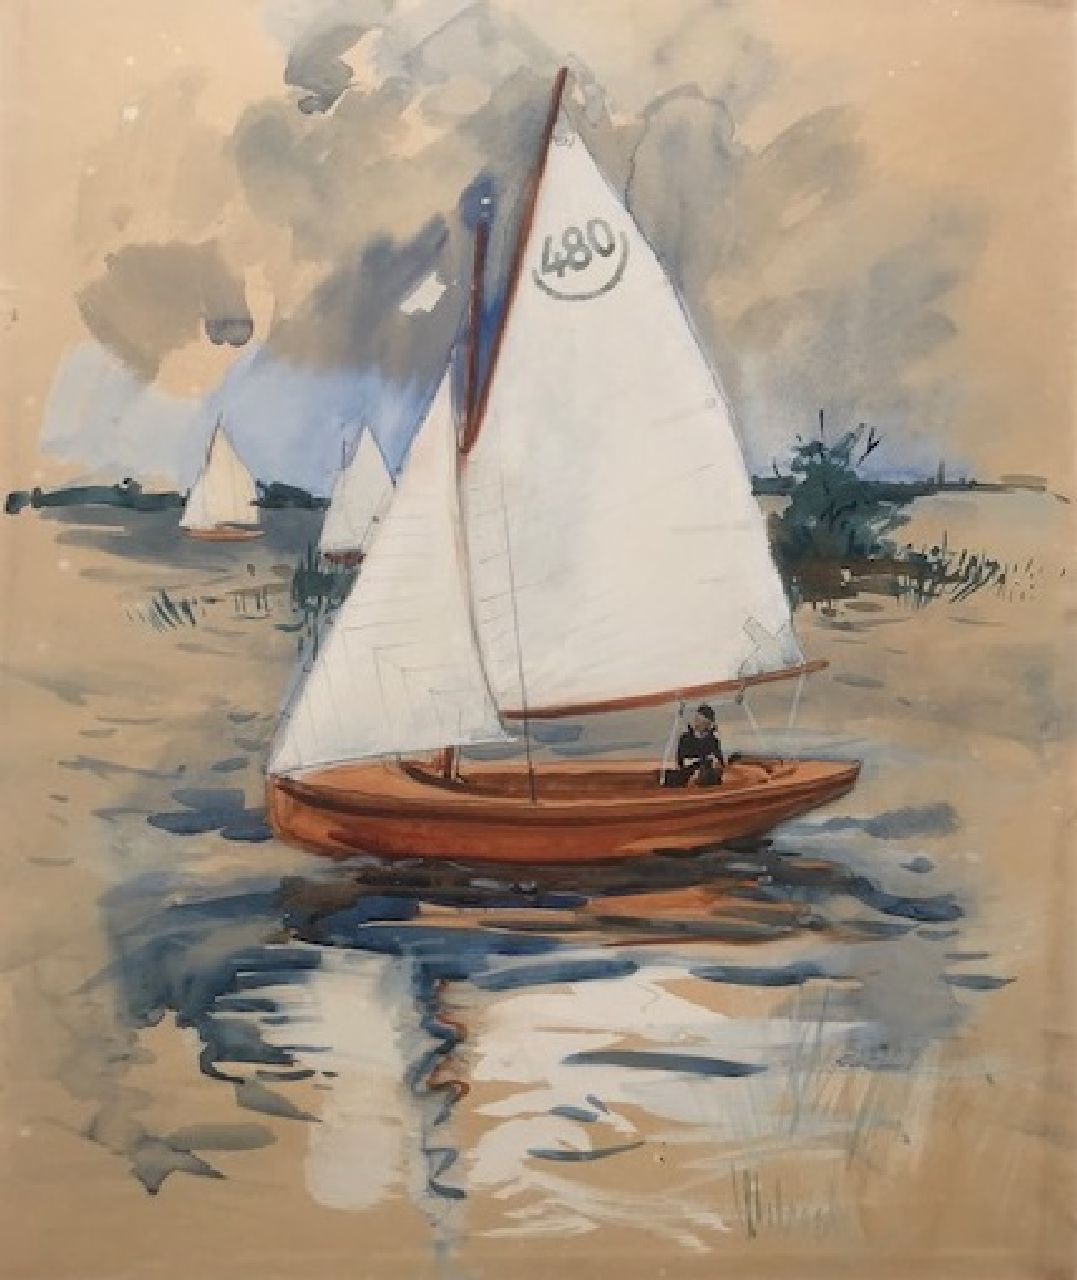 Ben Walrecht | Sailing on the paterswoldsemeer, Groningen, watercolour on paper, 46.2 x 38.2 cm, signed l.r.